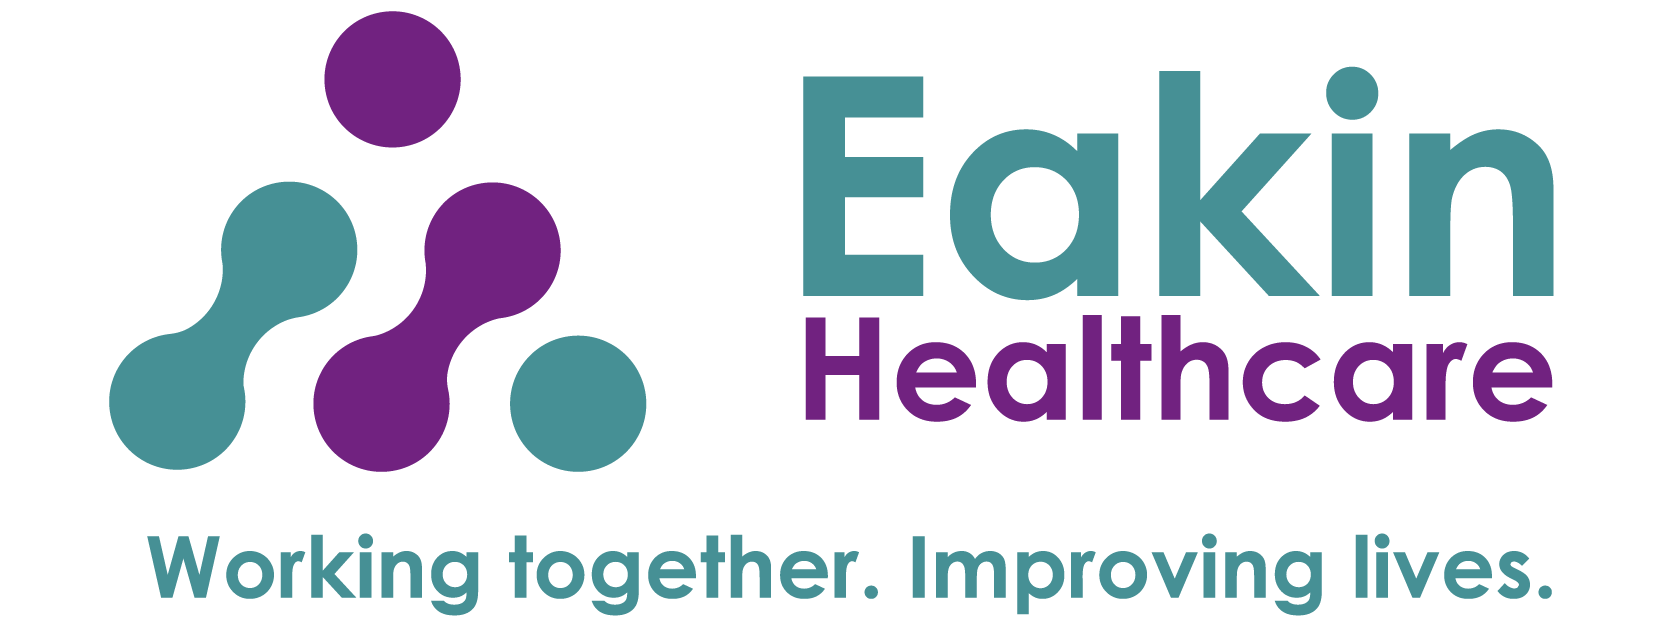 Eakin Healthcare logo and motto